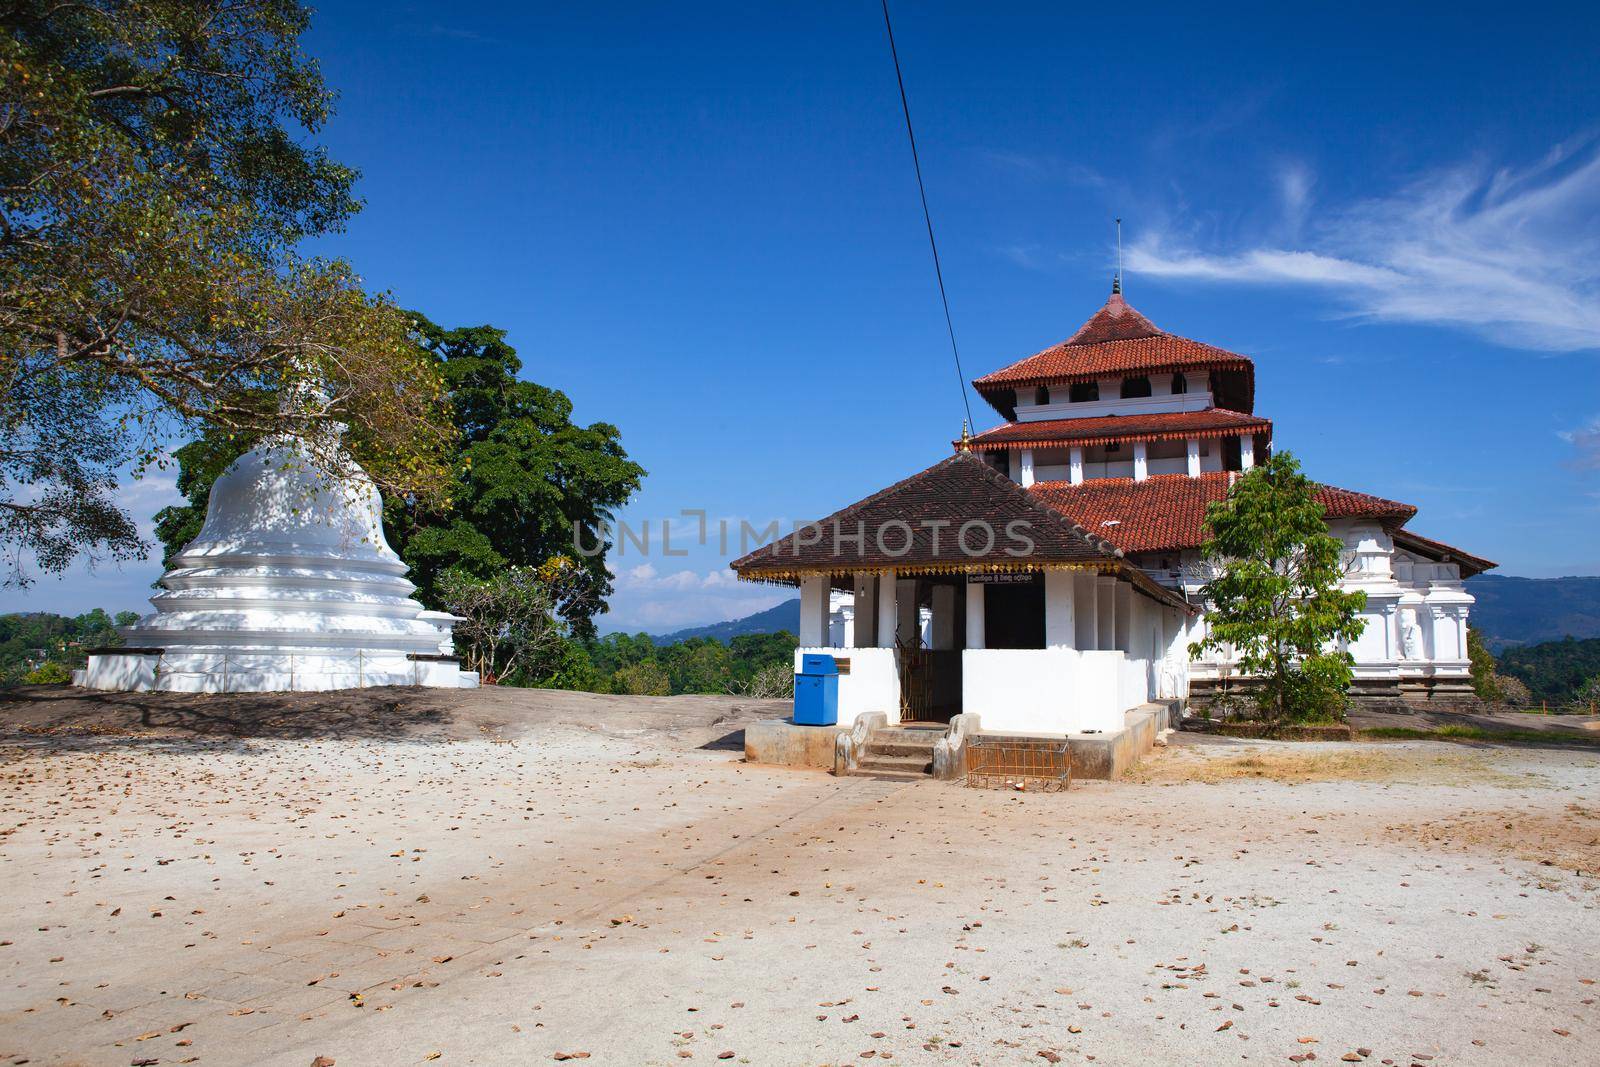 Lankatilaka Vihara is an ancient Buddhist temple situated in Udunuwara of Kandy, Sri Lanka by CaptureLight